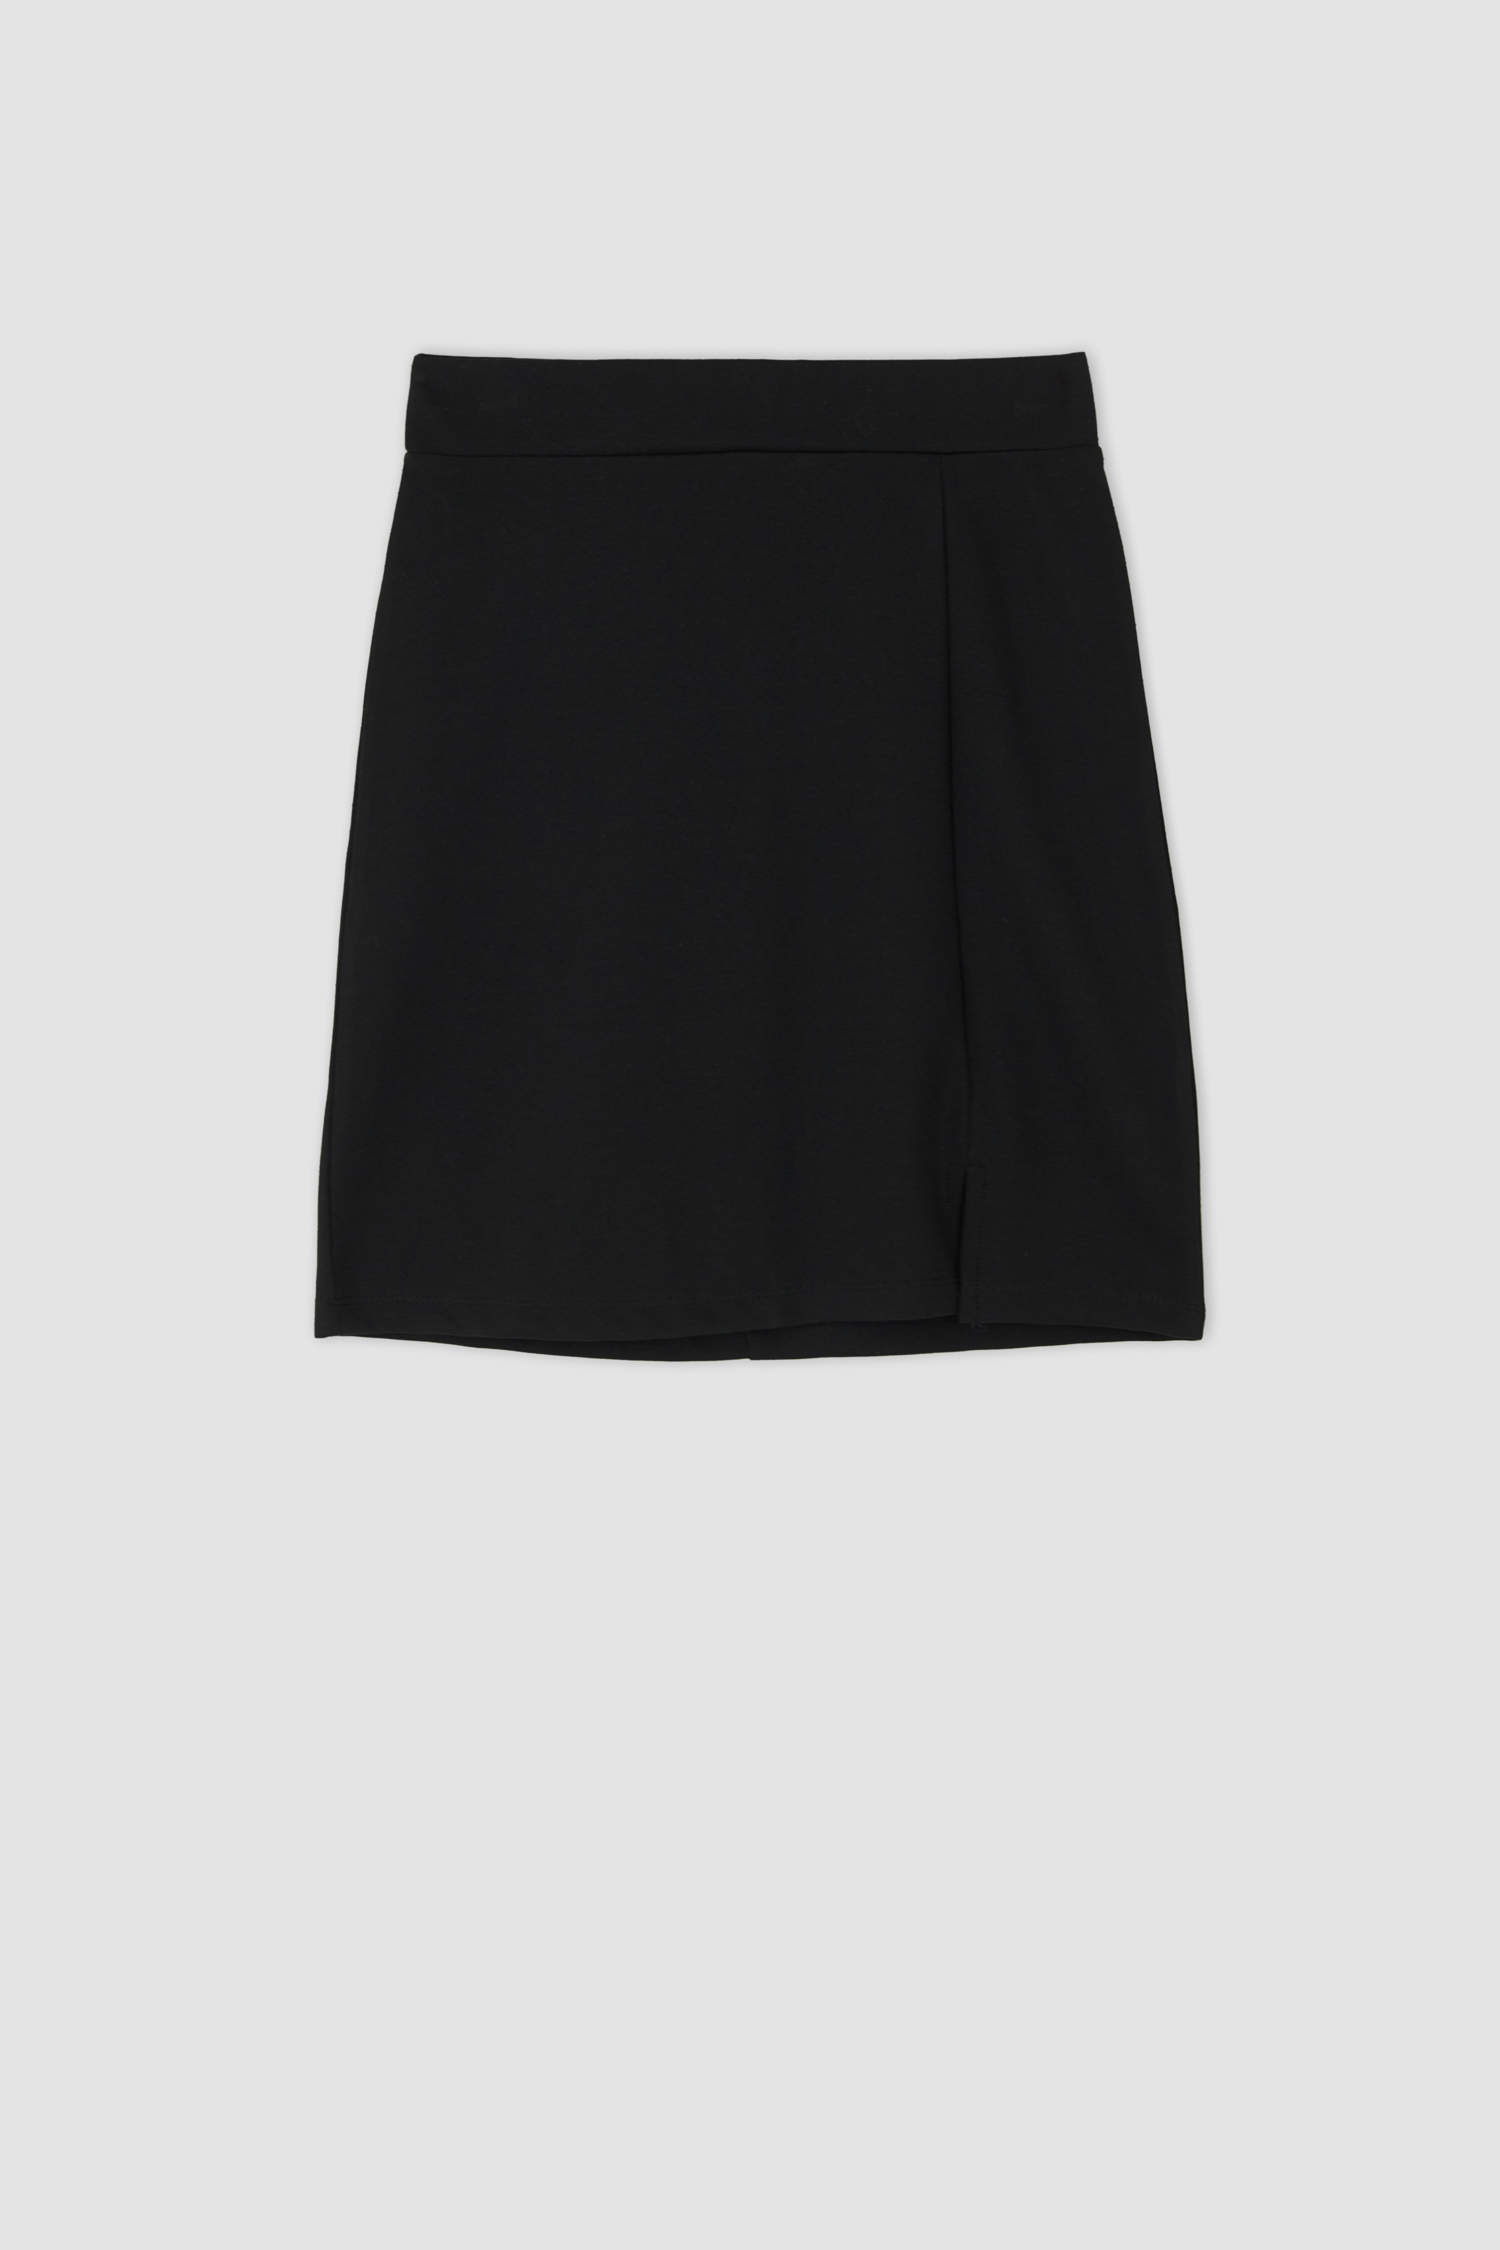 Black WOMEN A Cut Mini Skirt 2373568 | DeFacto